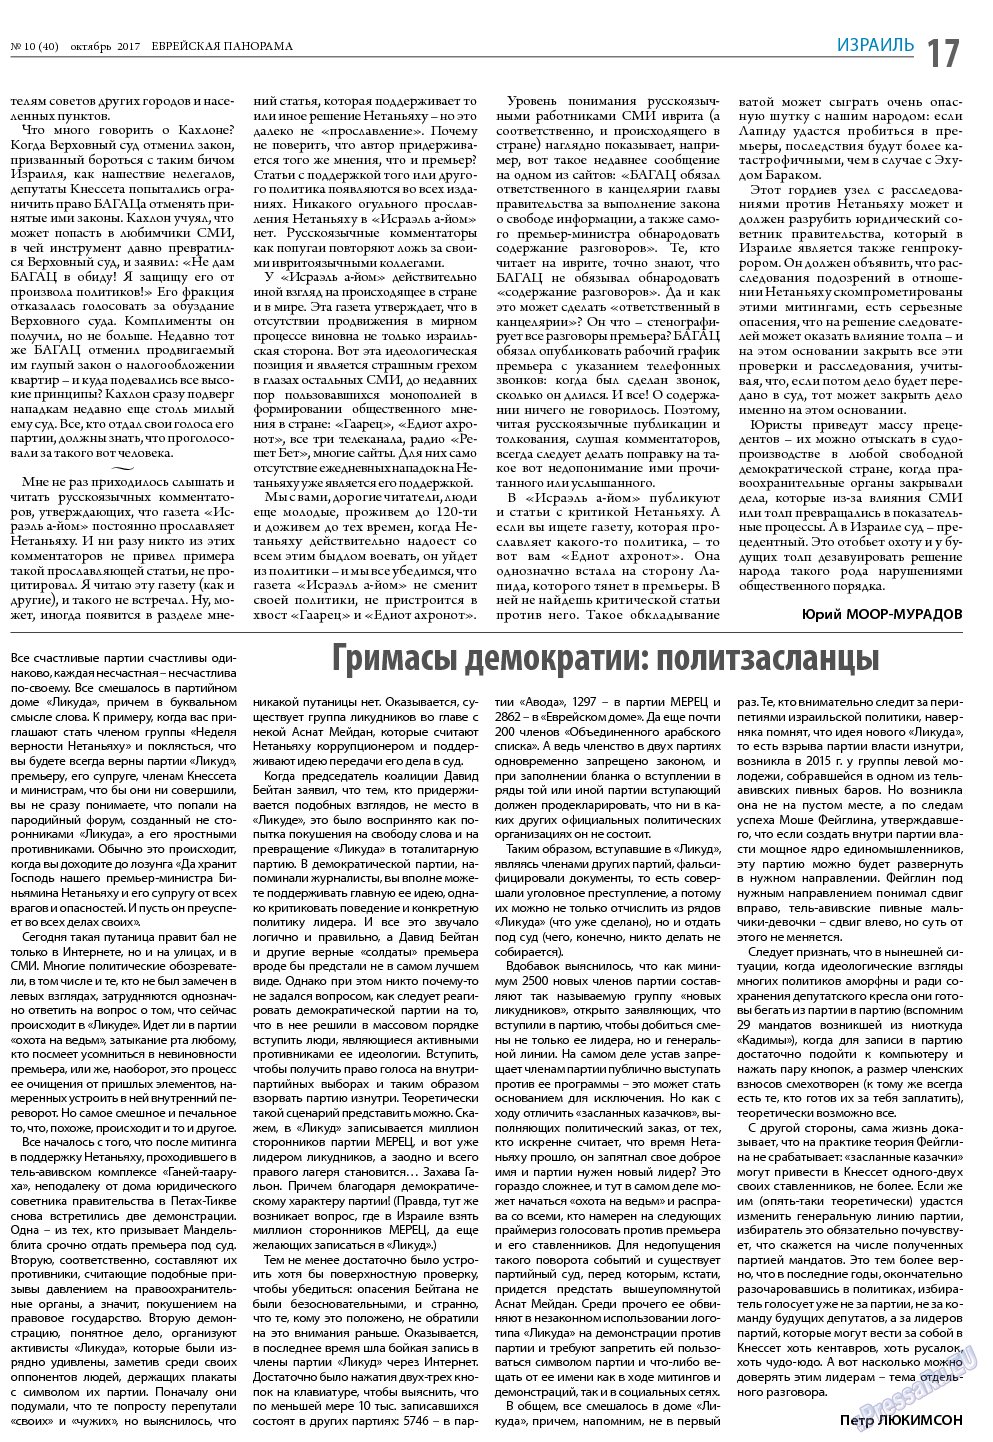 Еврейская панорама, газета. 2017 №10 стр.17